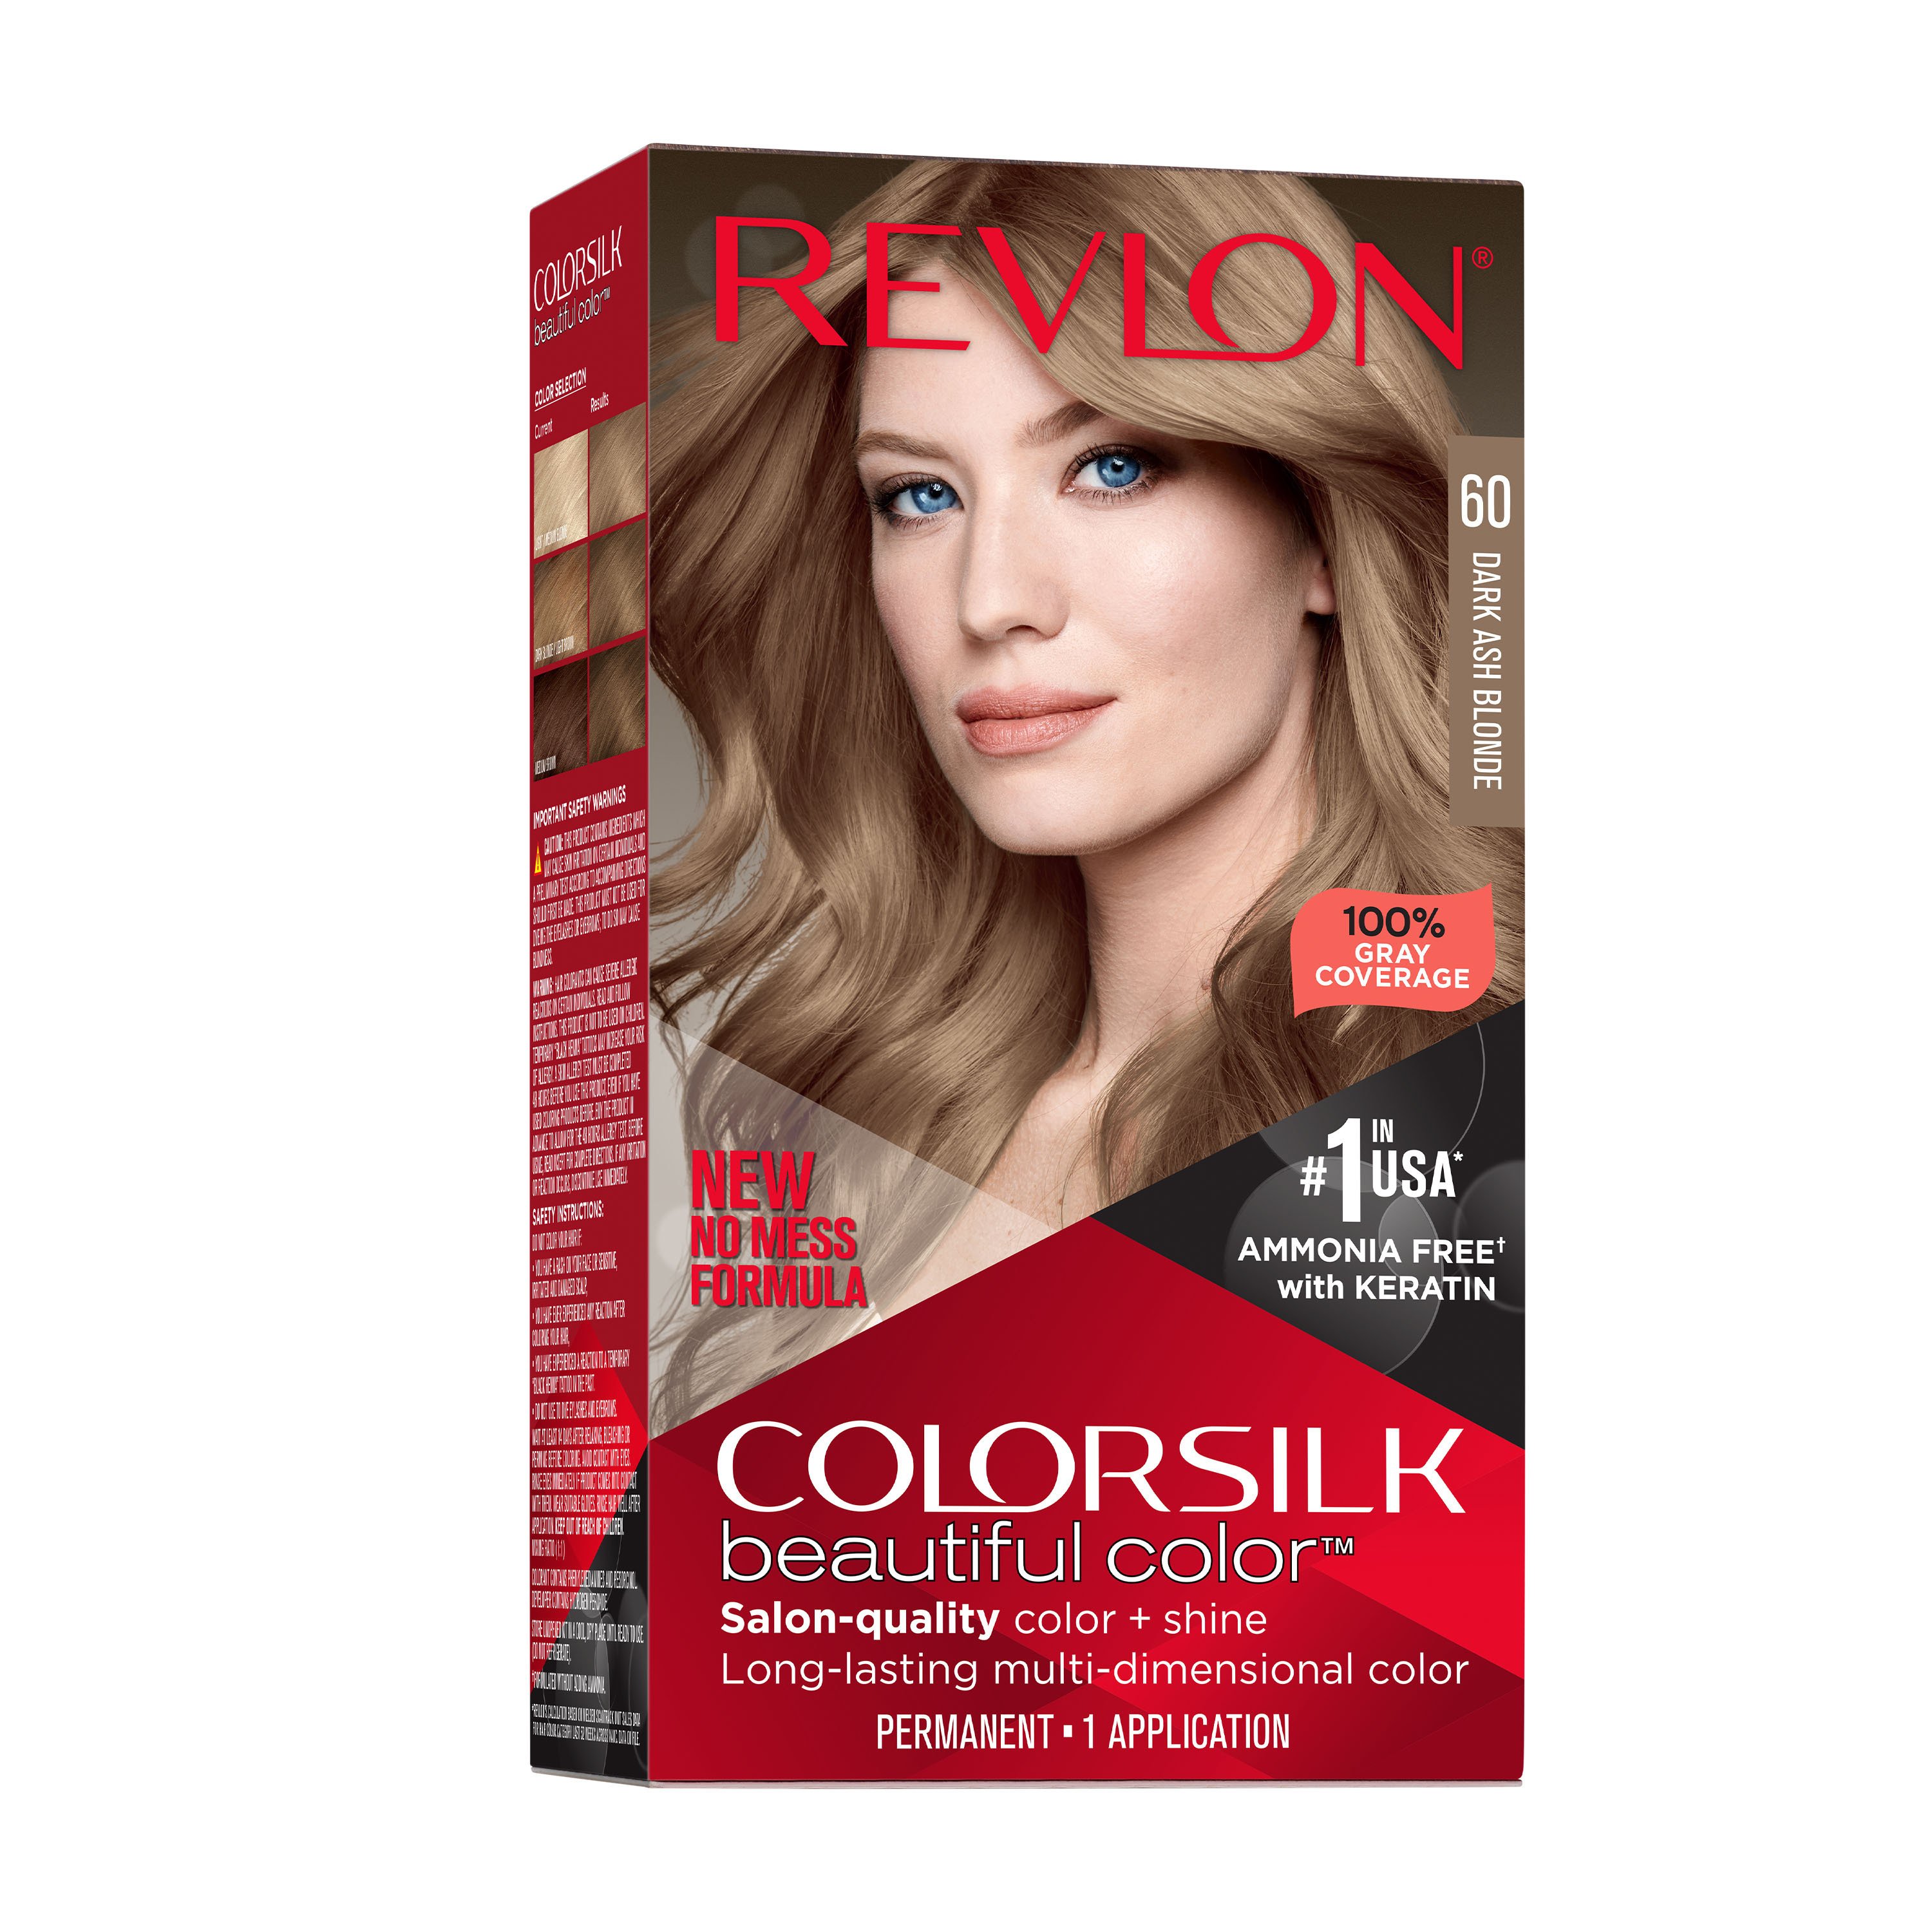 Revlon ColorSilk Hair Color 060 Dark Ash Blonde - Shop Hair Care at H-E-B